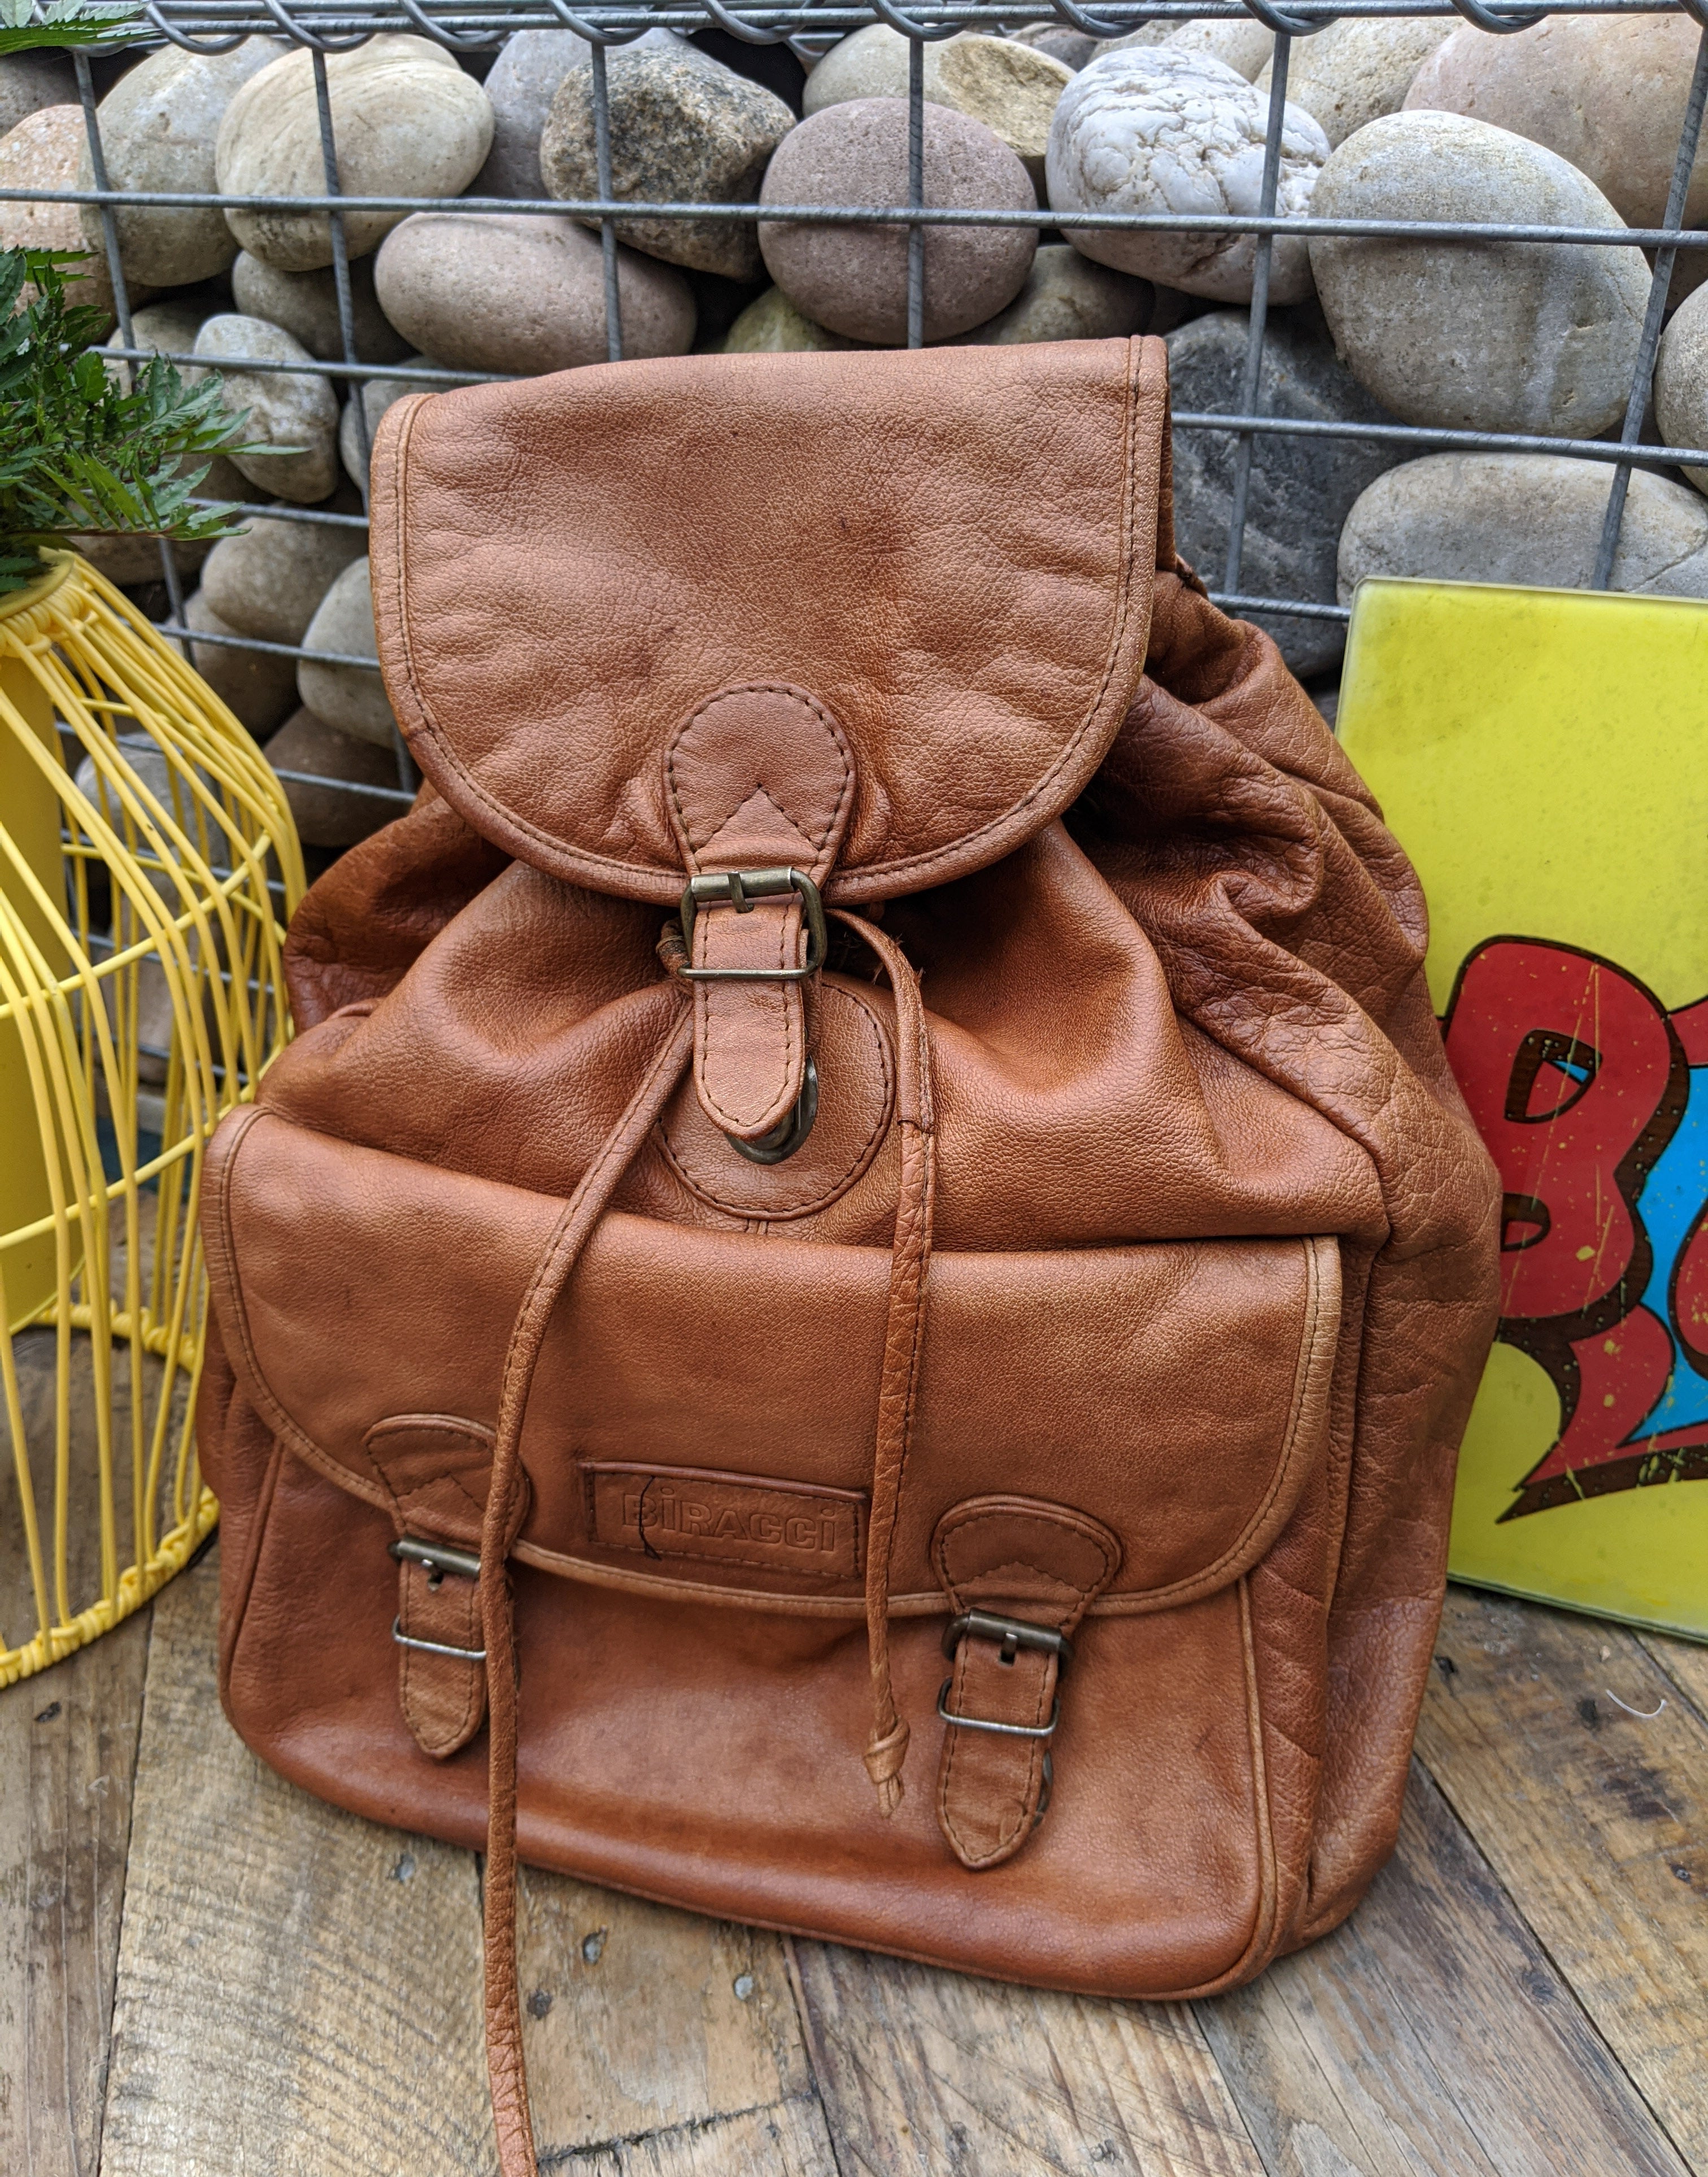 Vintage large brown leather backpack